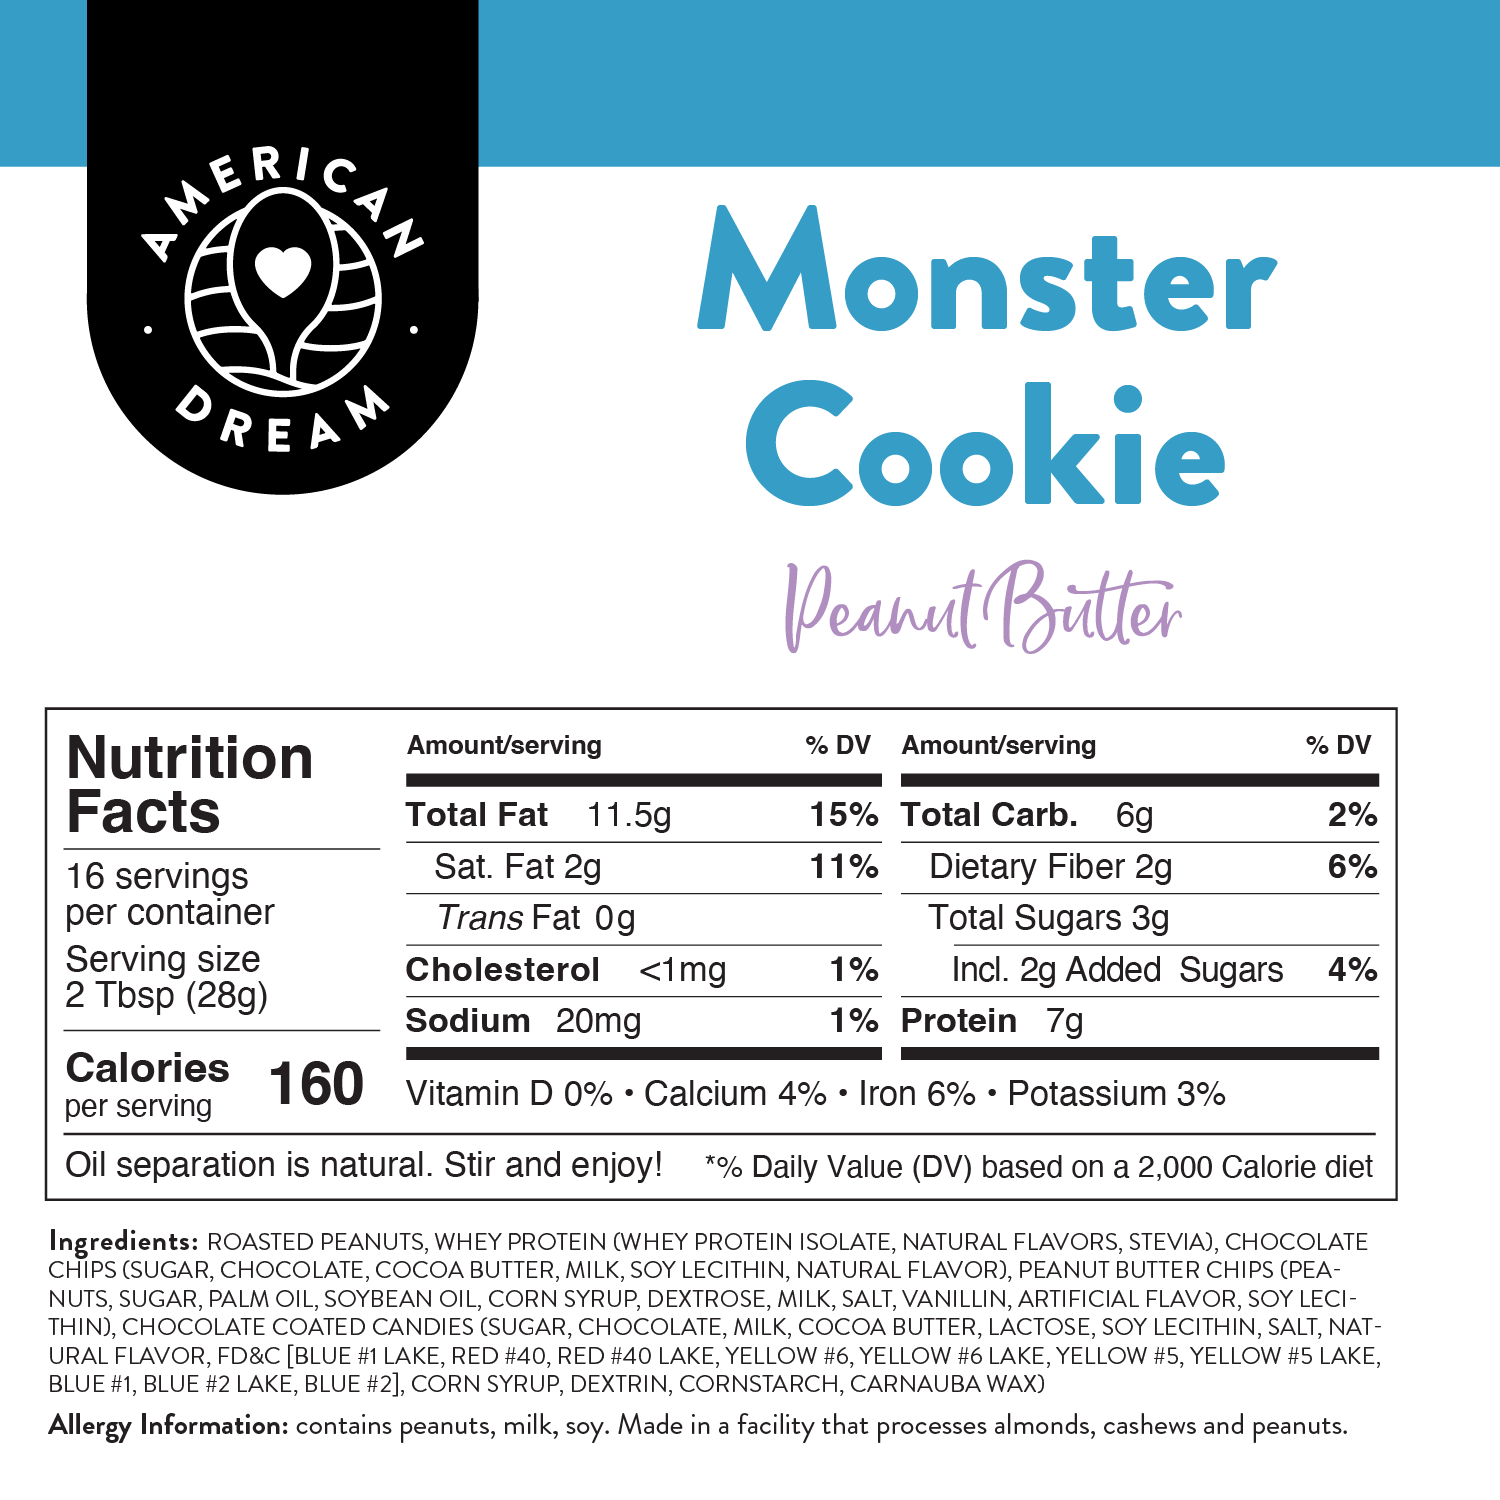 Gluten-Free Monster Cookie Peanut Butter